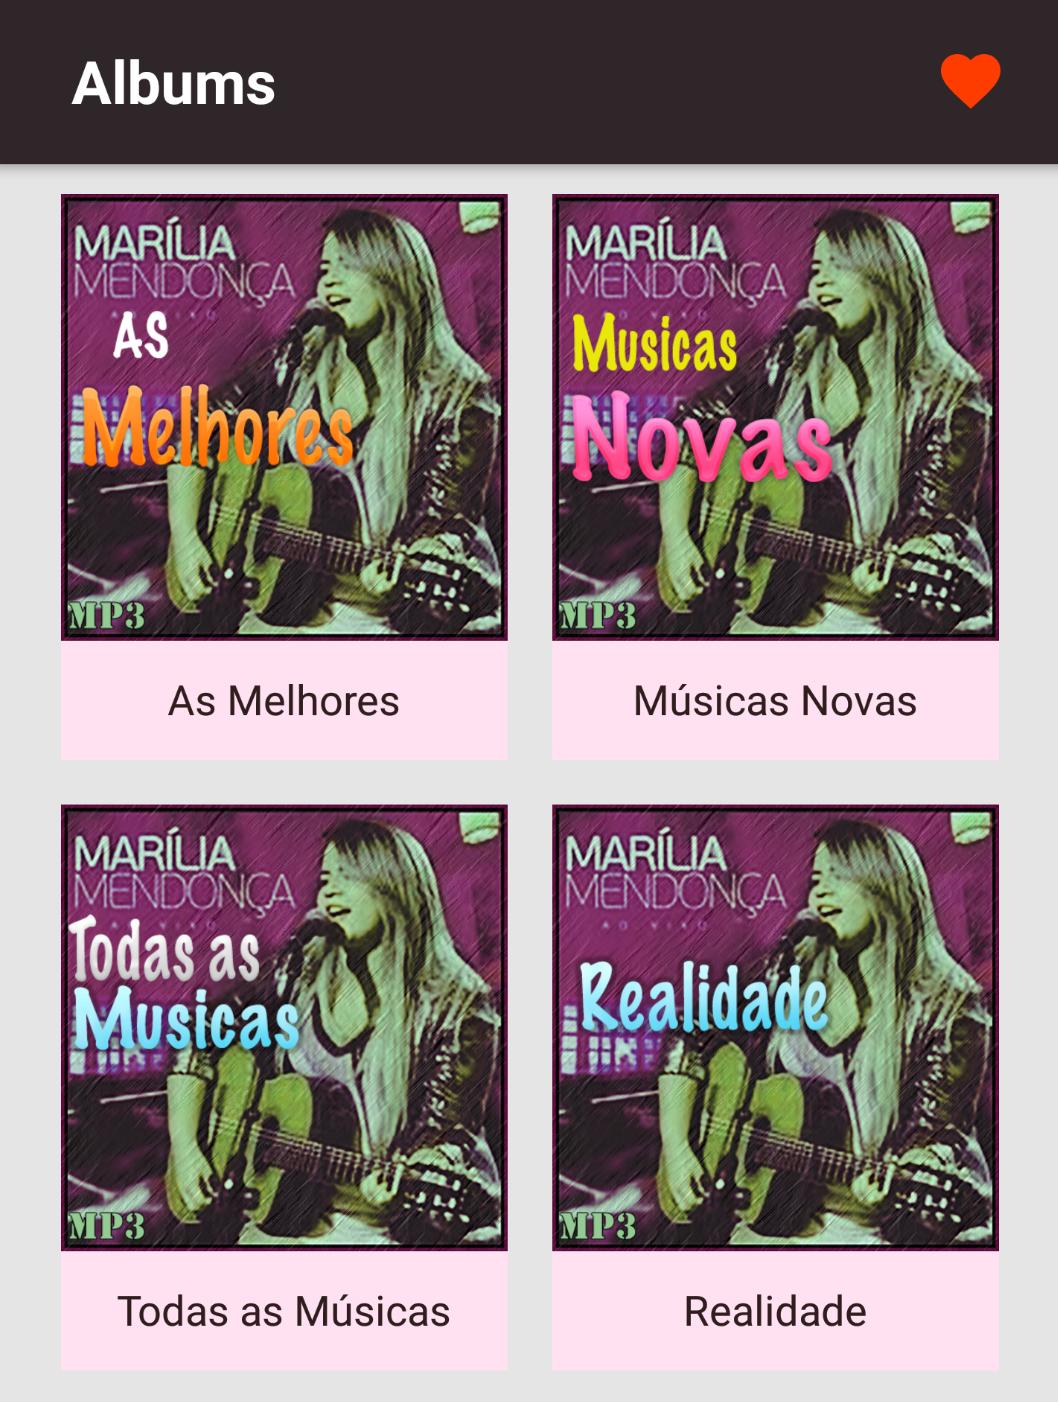 Marilia Mendonca as melhores 2018 for Android - APK Download